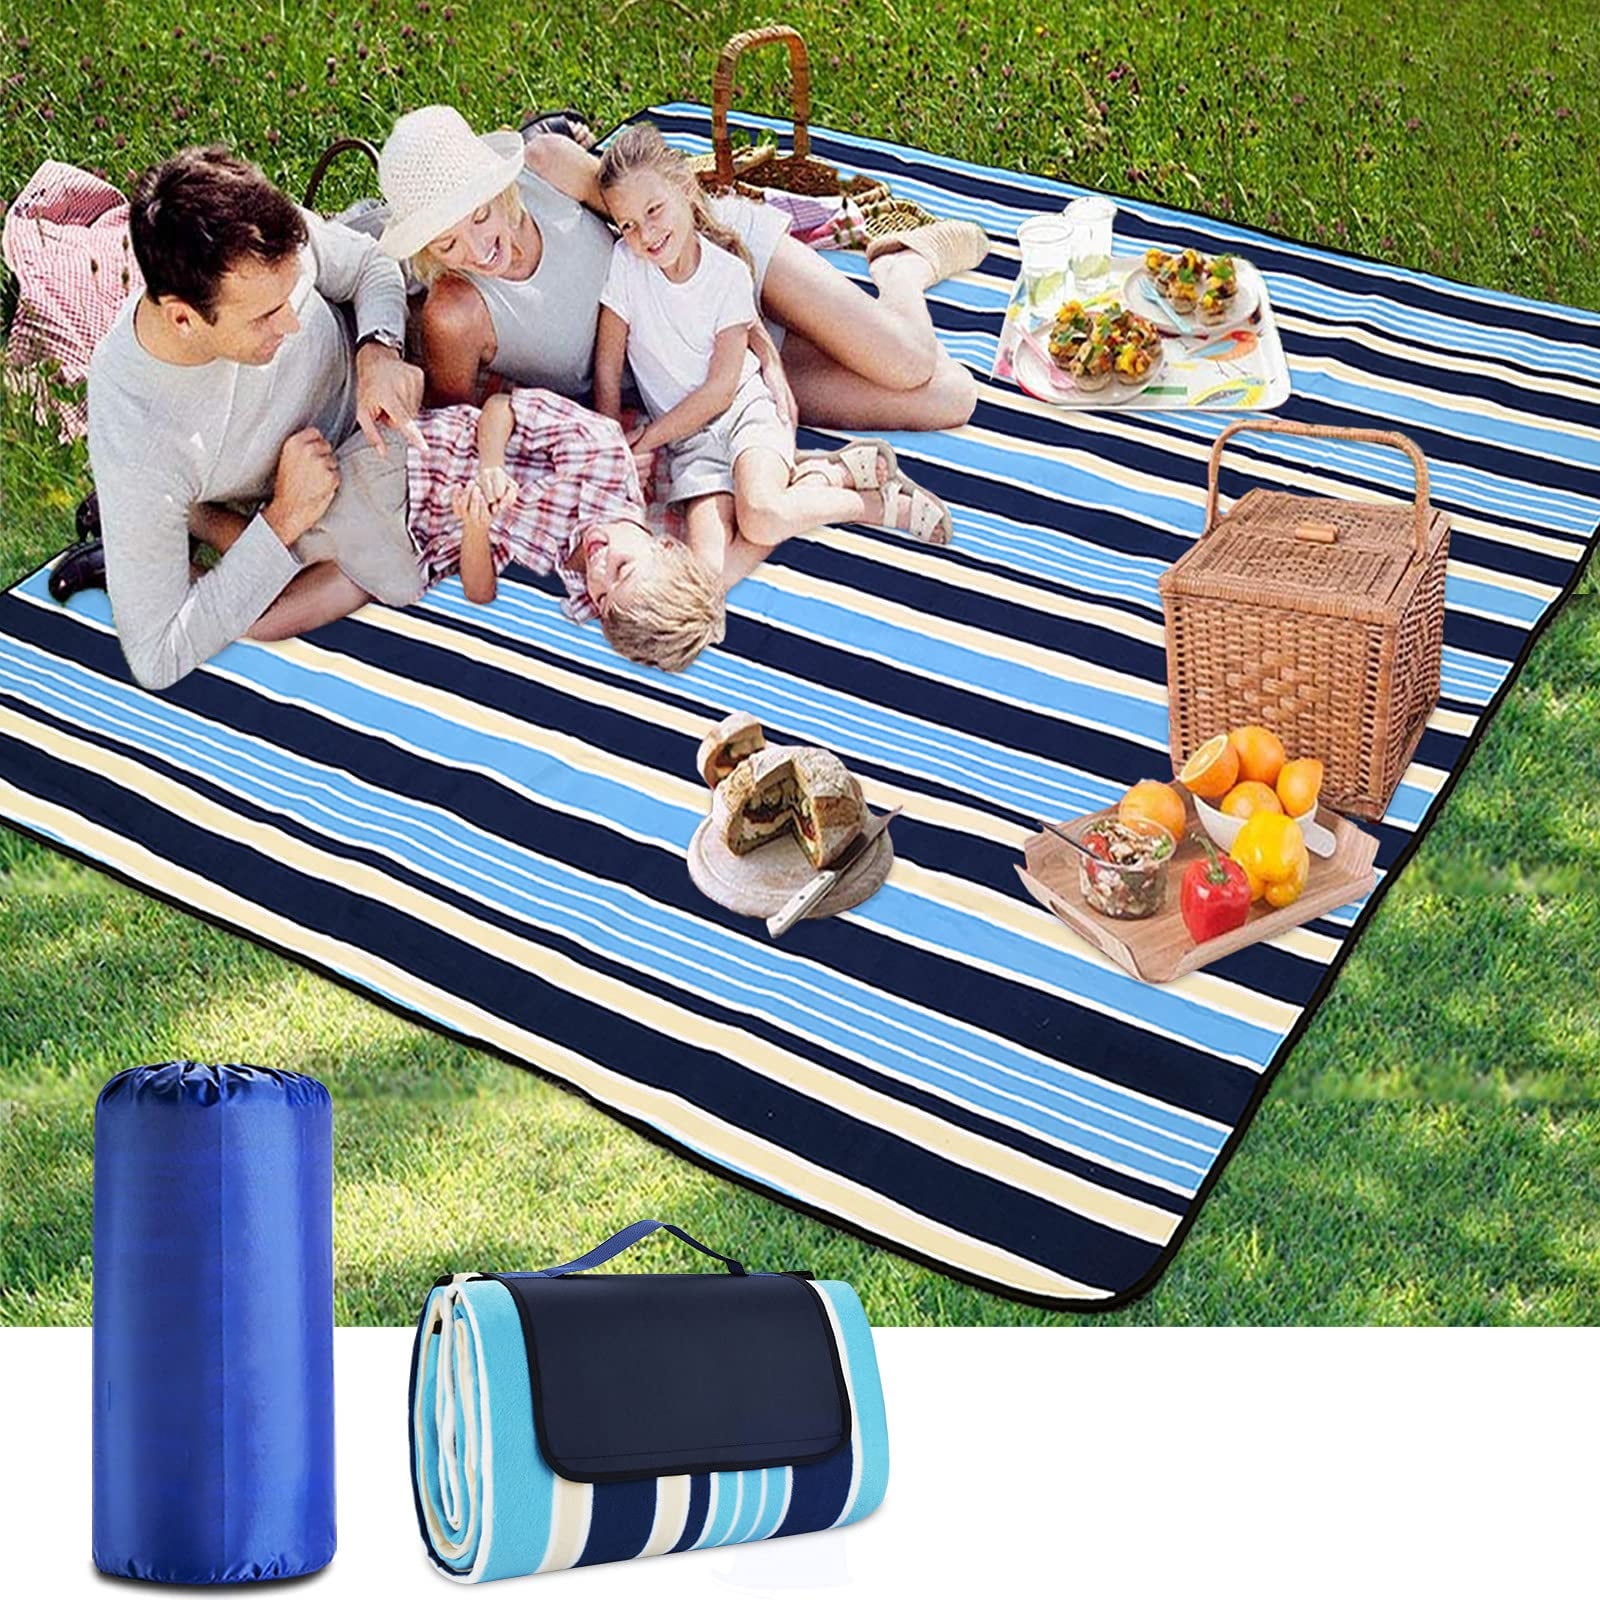 KingCamp Portable durable picnic mat for picnics and beaches Camping Outdoor Hot 